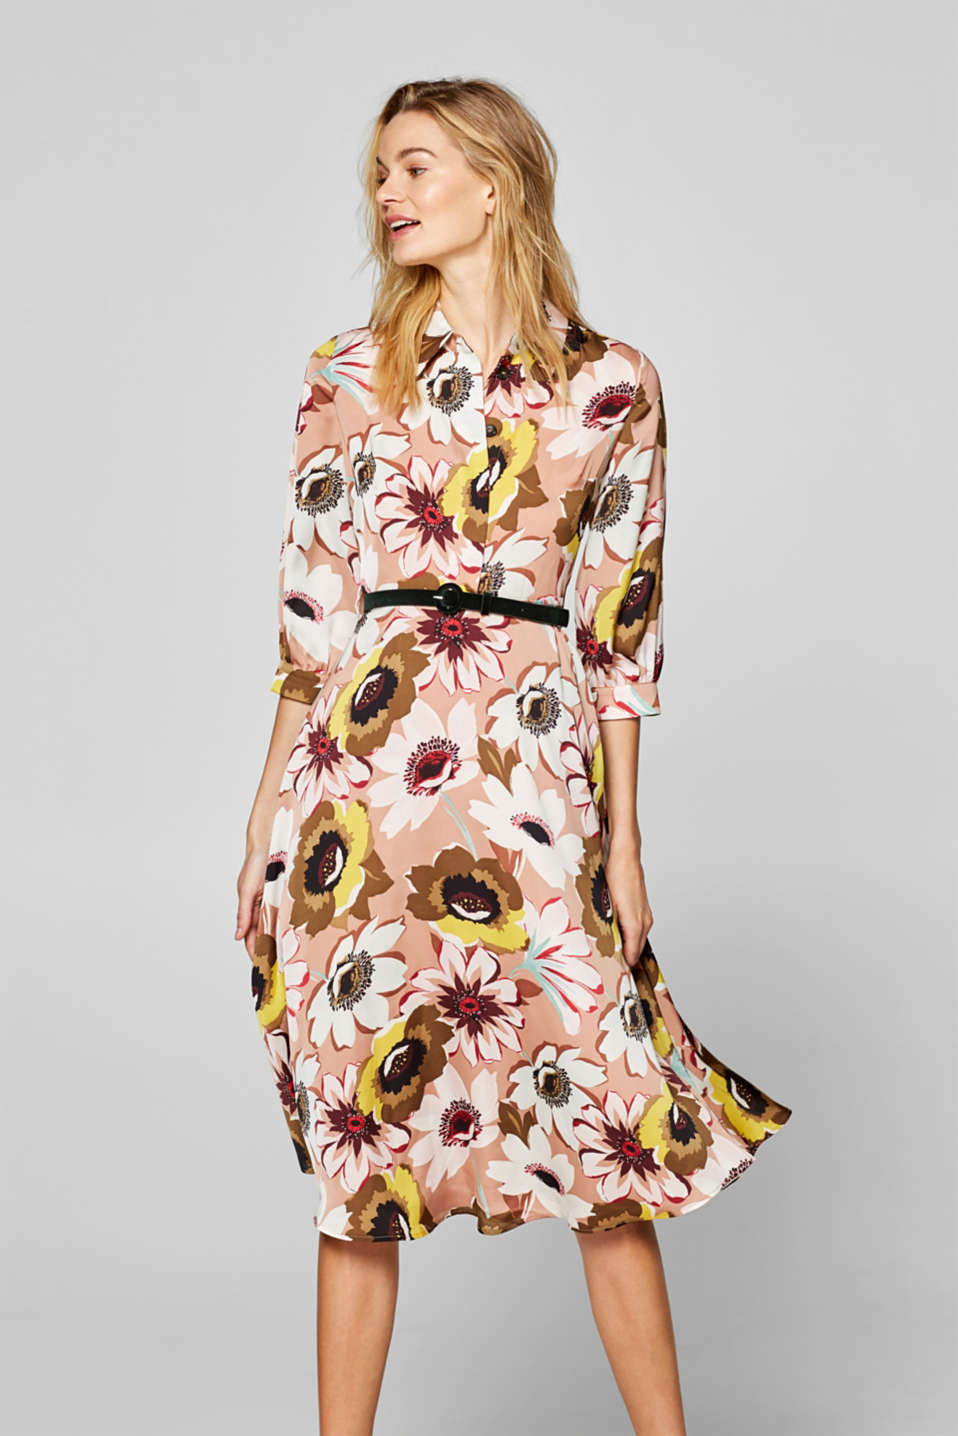 Esprit - Shirt dress with a floral print and belt